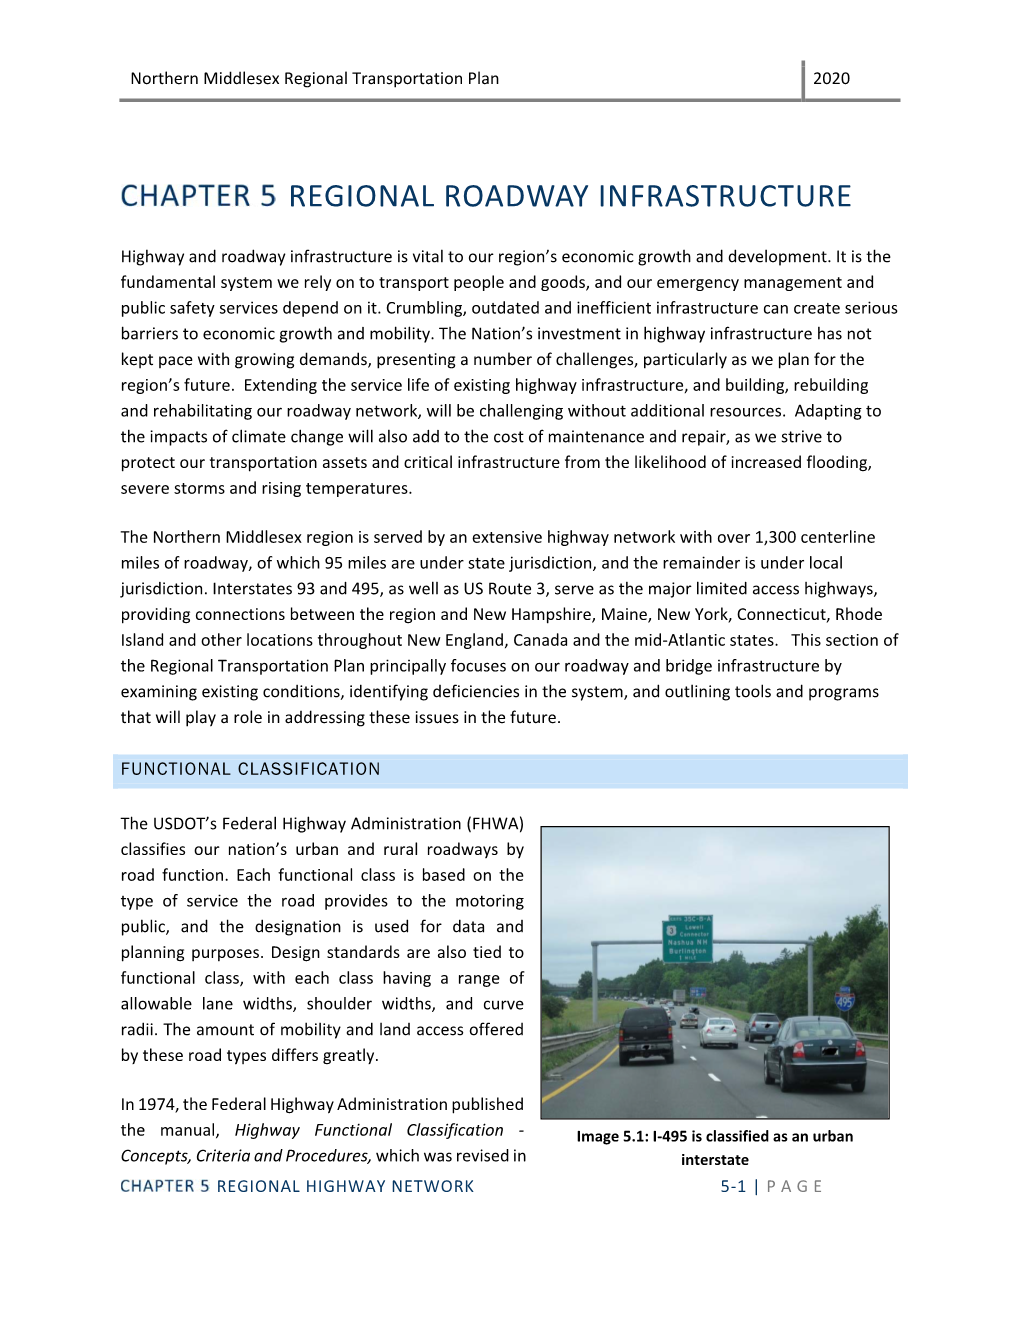 Regional Roadway Infrastructure